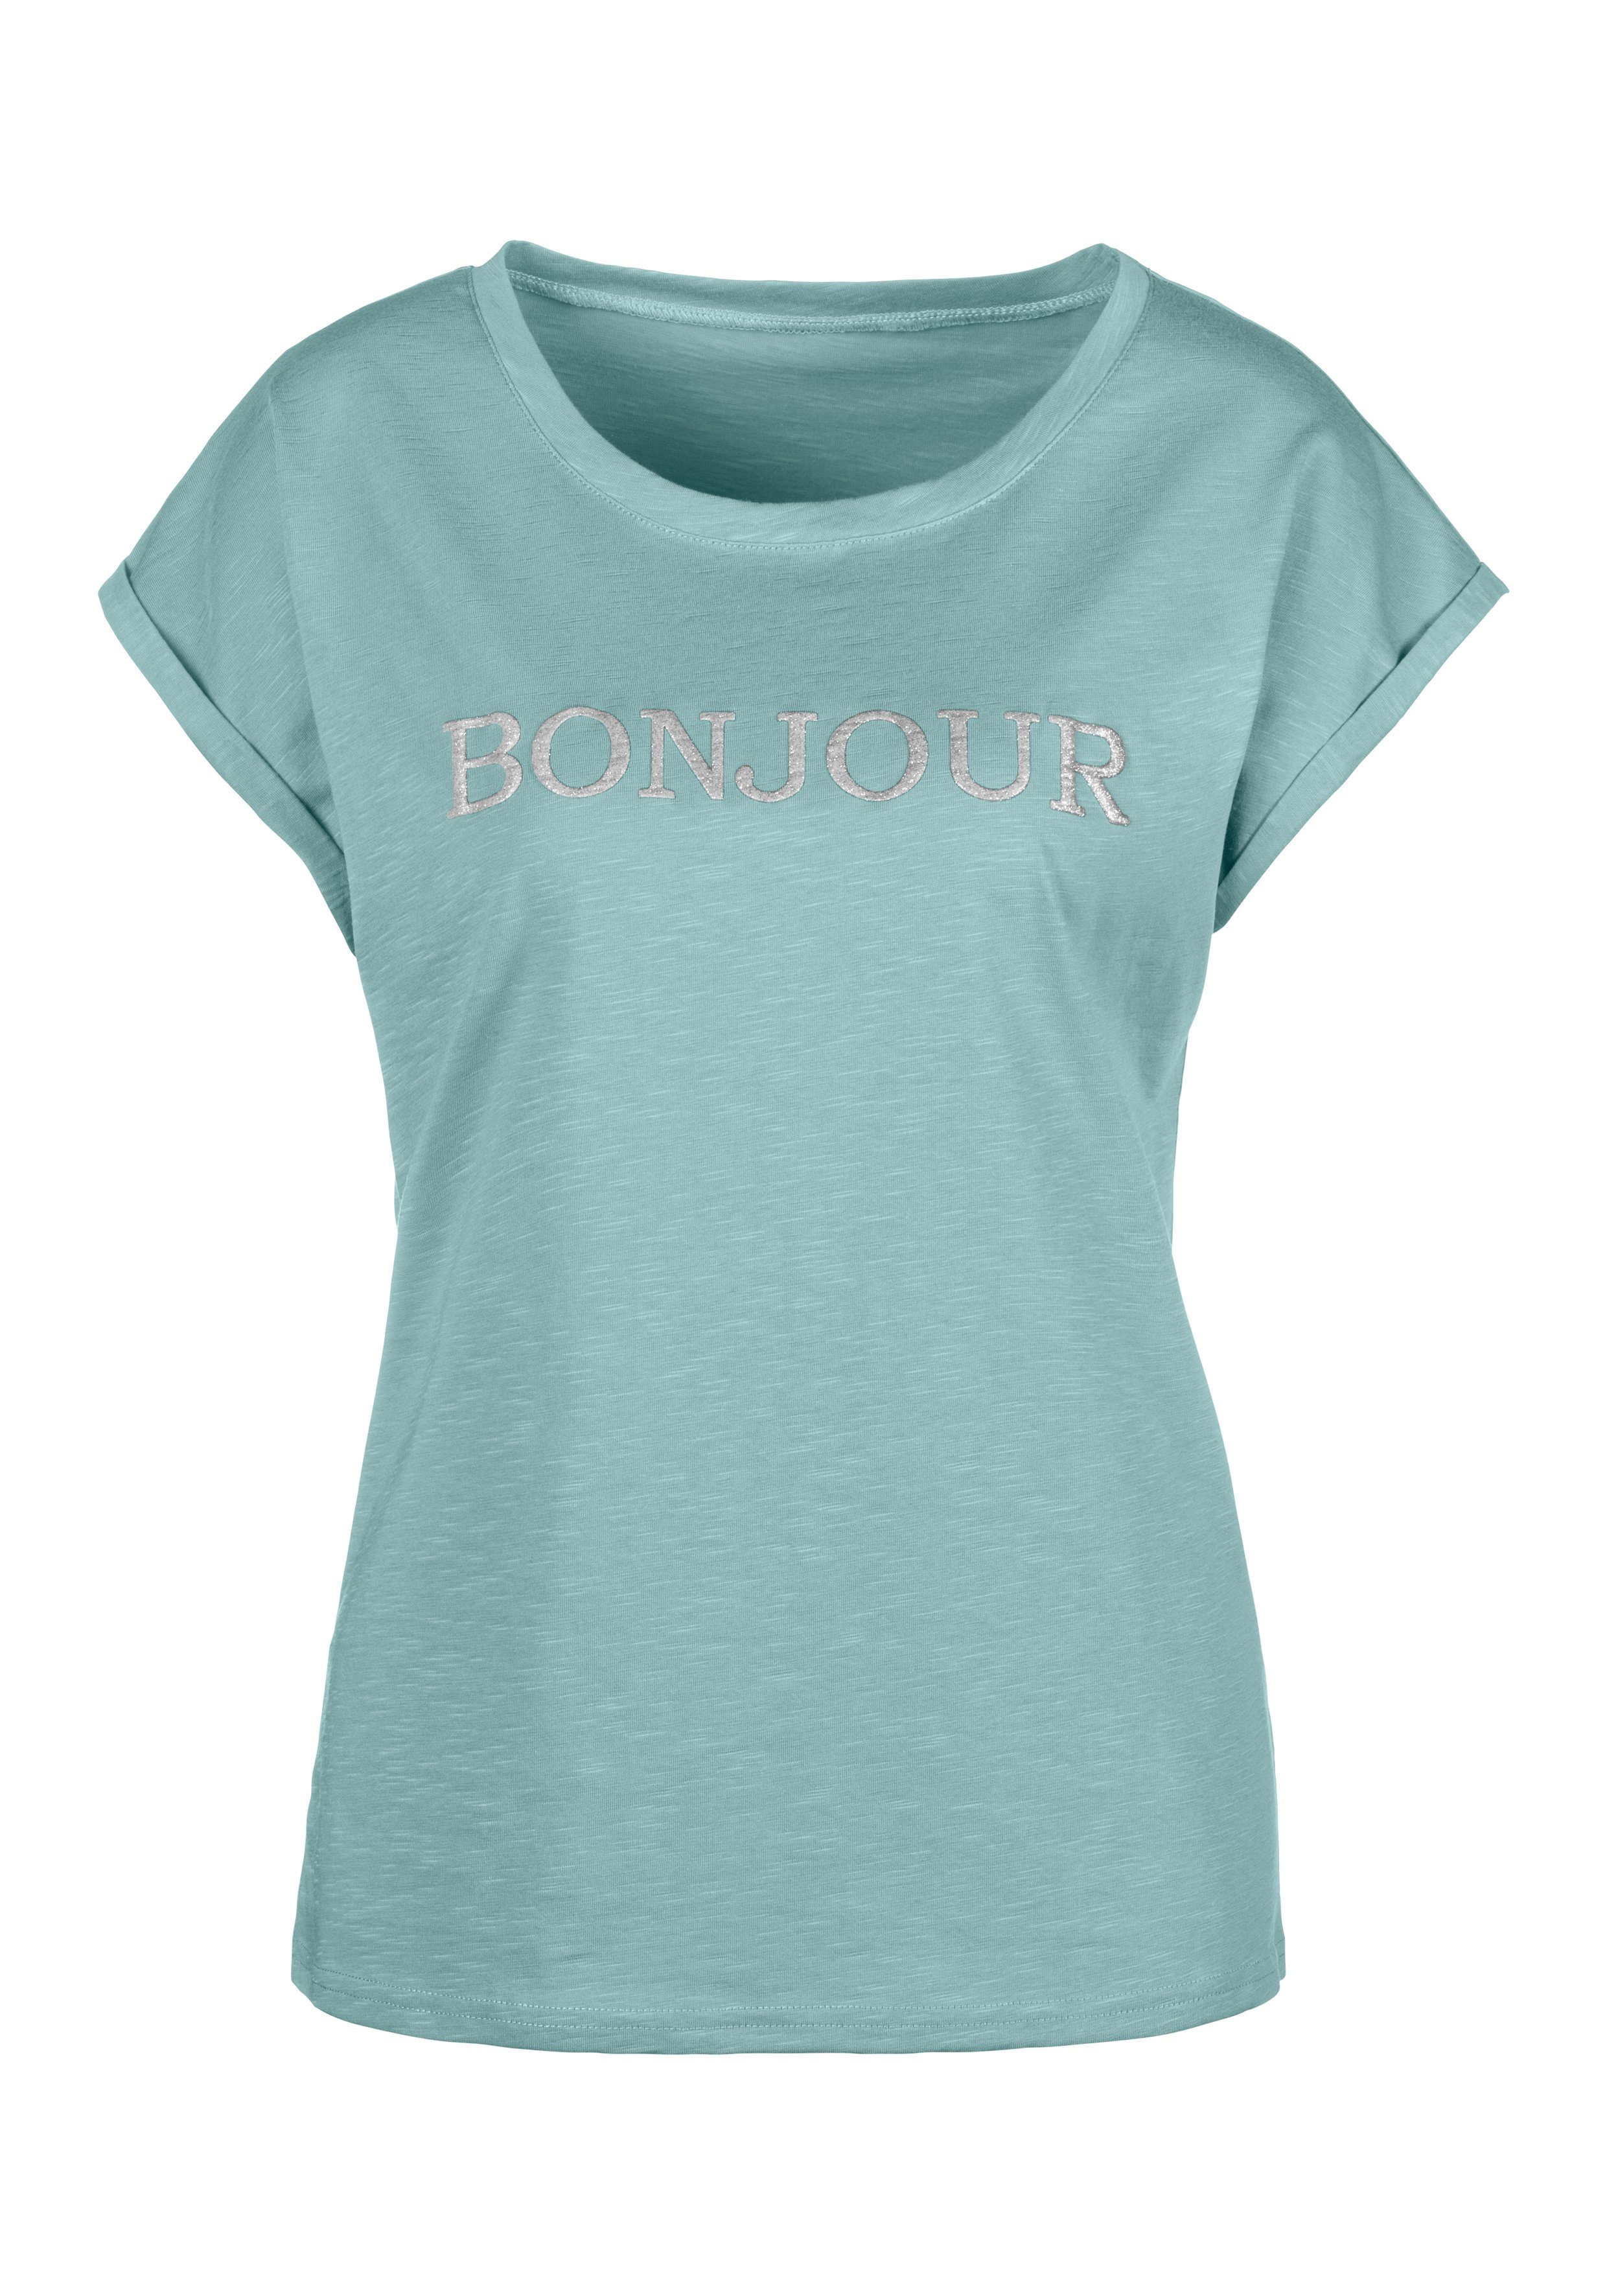 "Bonjour" Frontdruck mit mint T-Shirt modischem Vivance